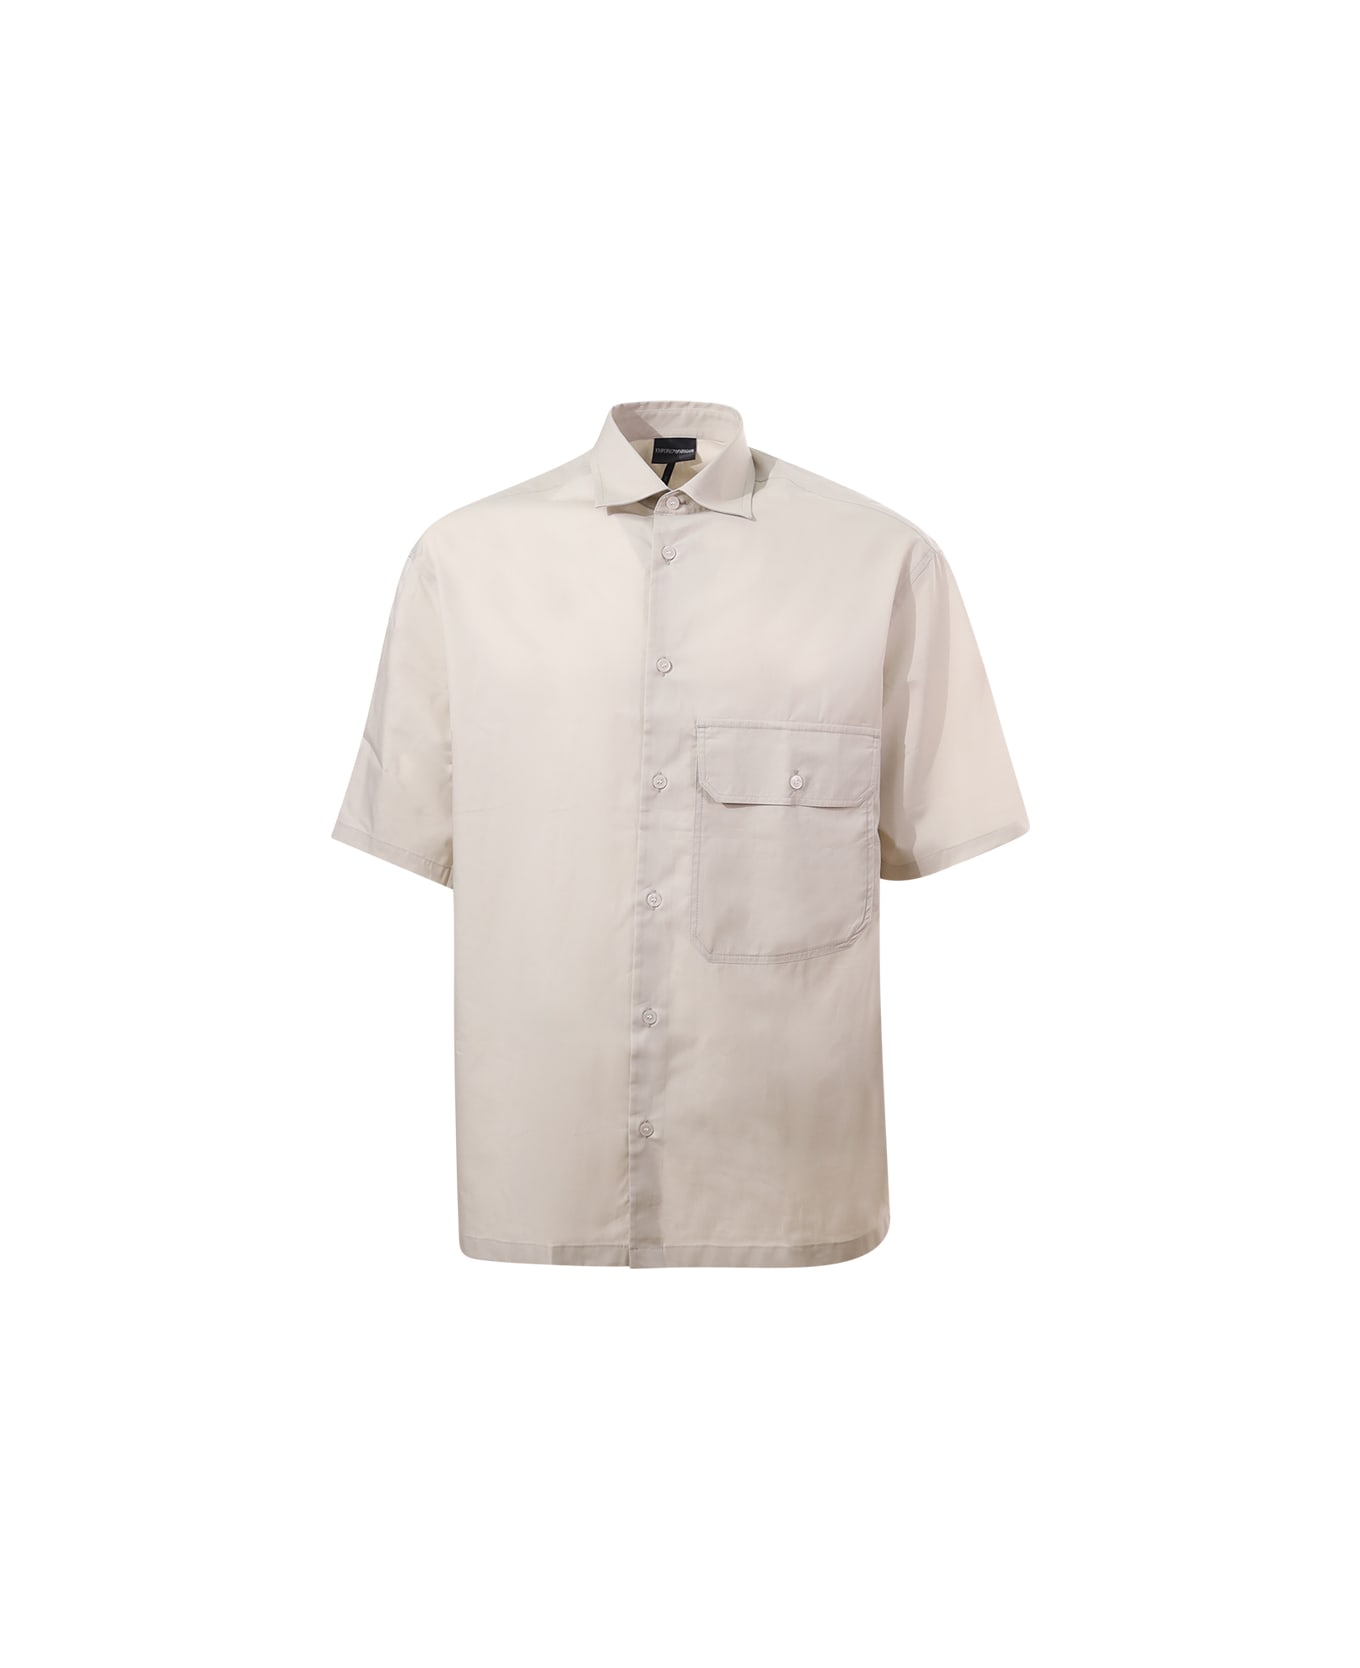 Emporio Armani Shirt - Light Grey